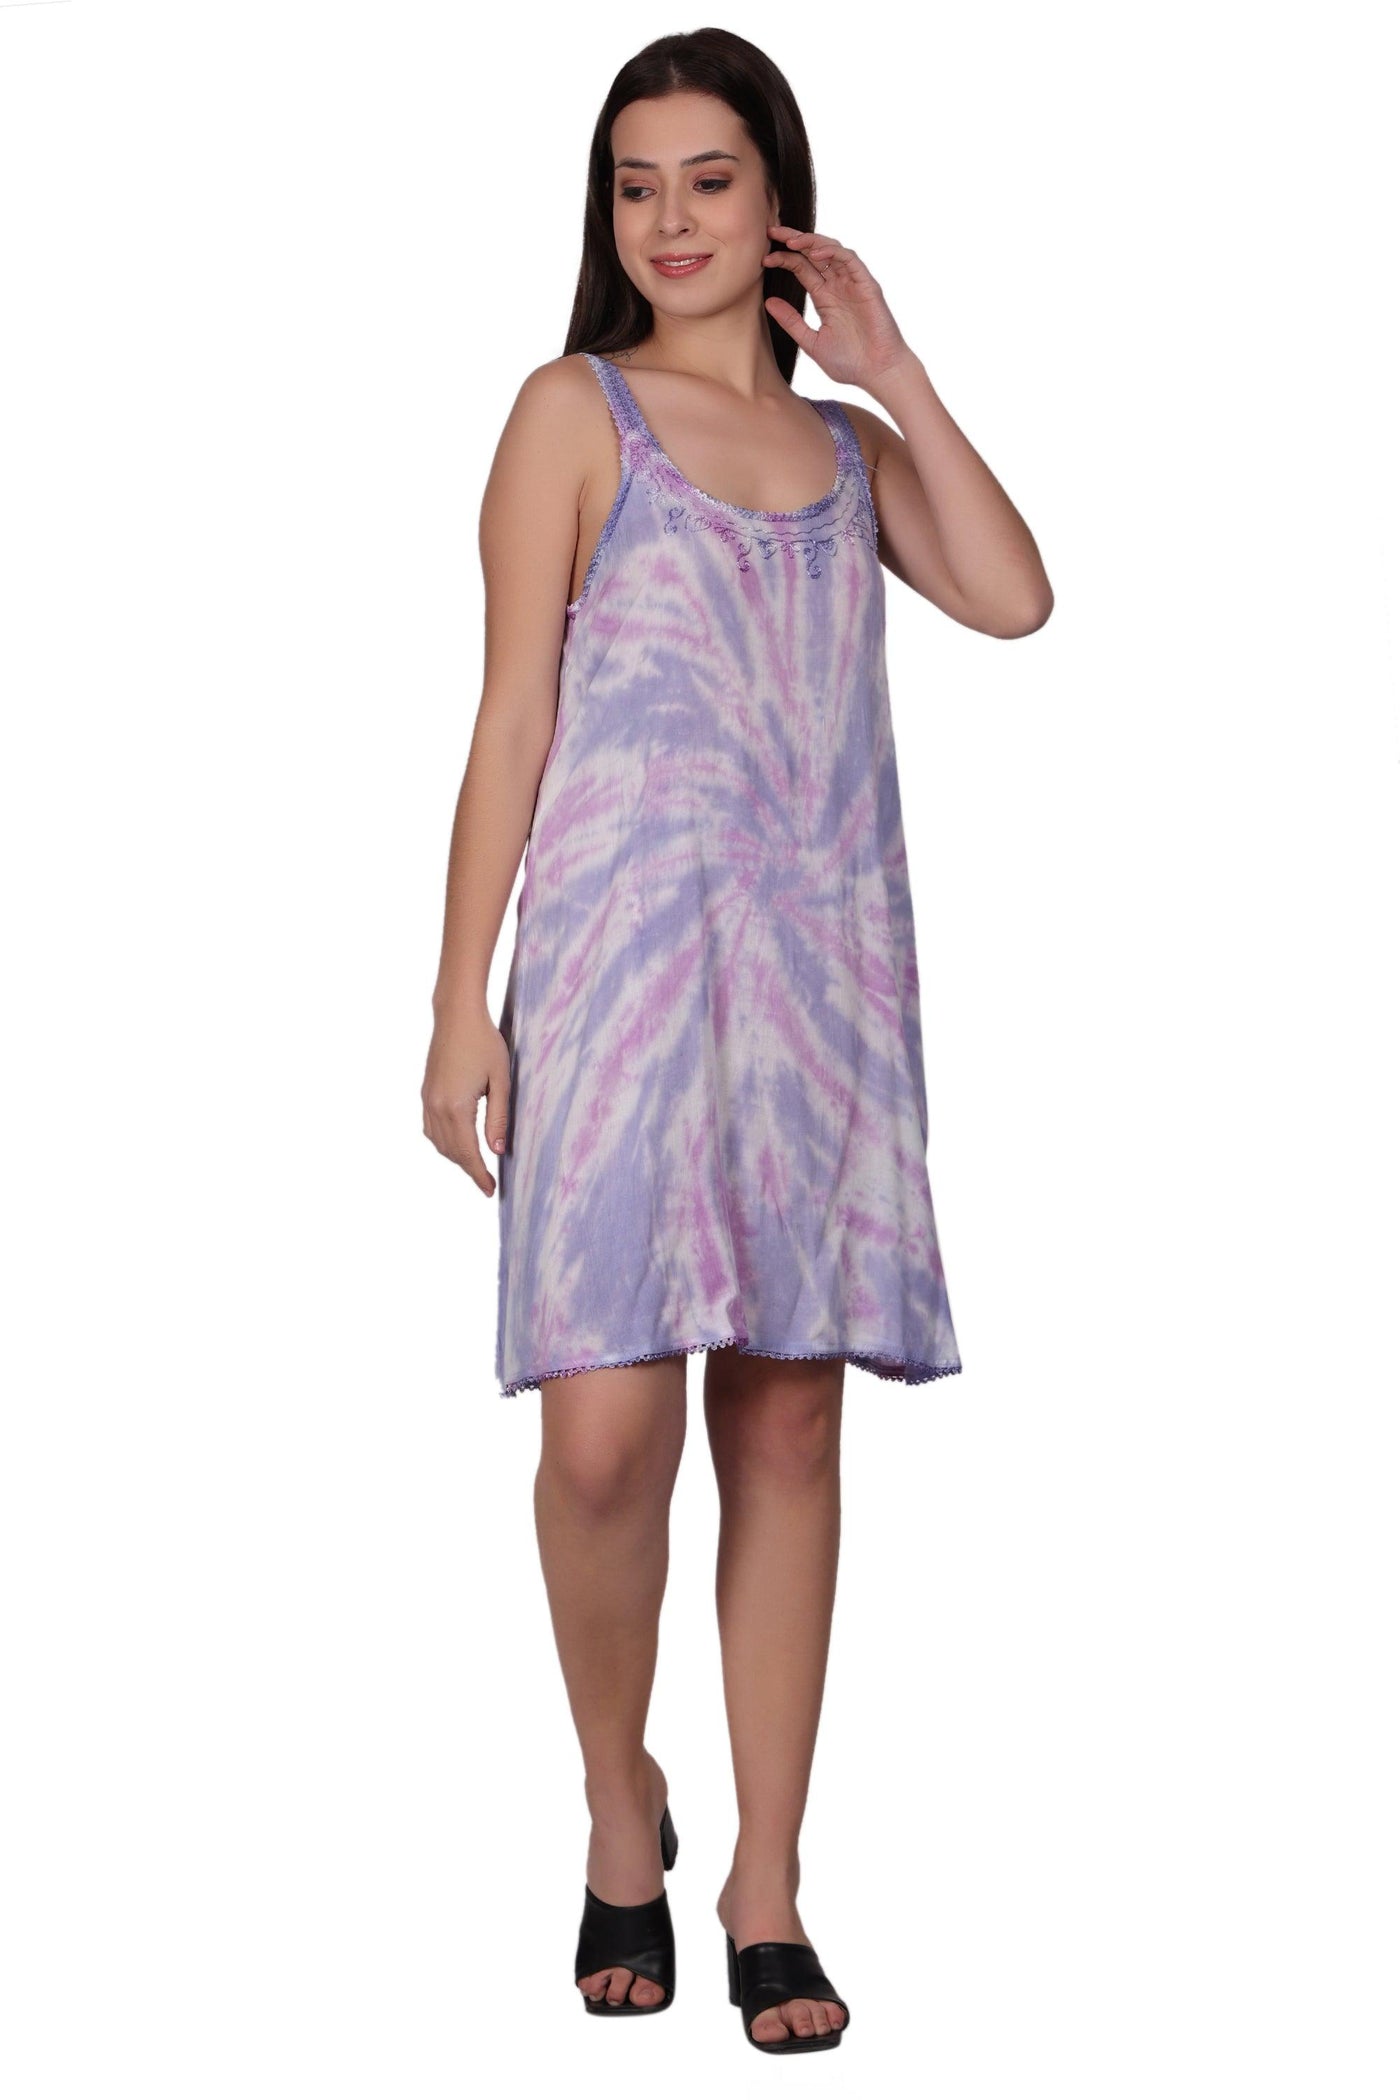 Laced Tie Dye Beach Dress 362212LACE  - Advance Apparels Inc